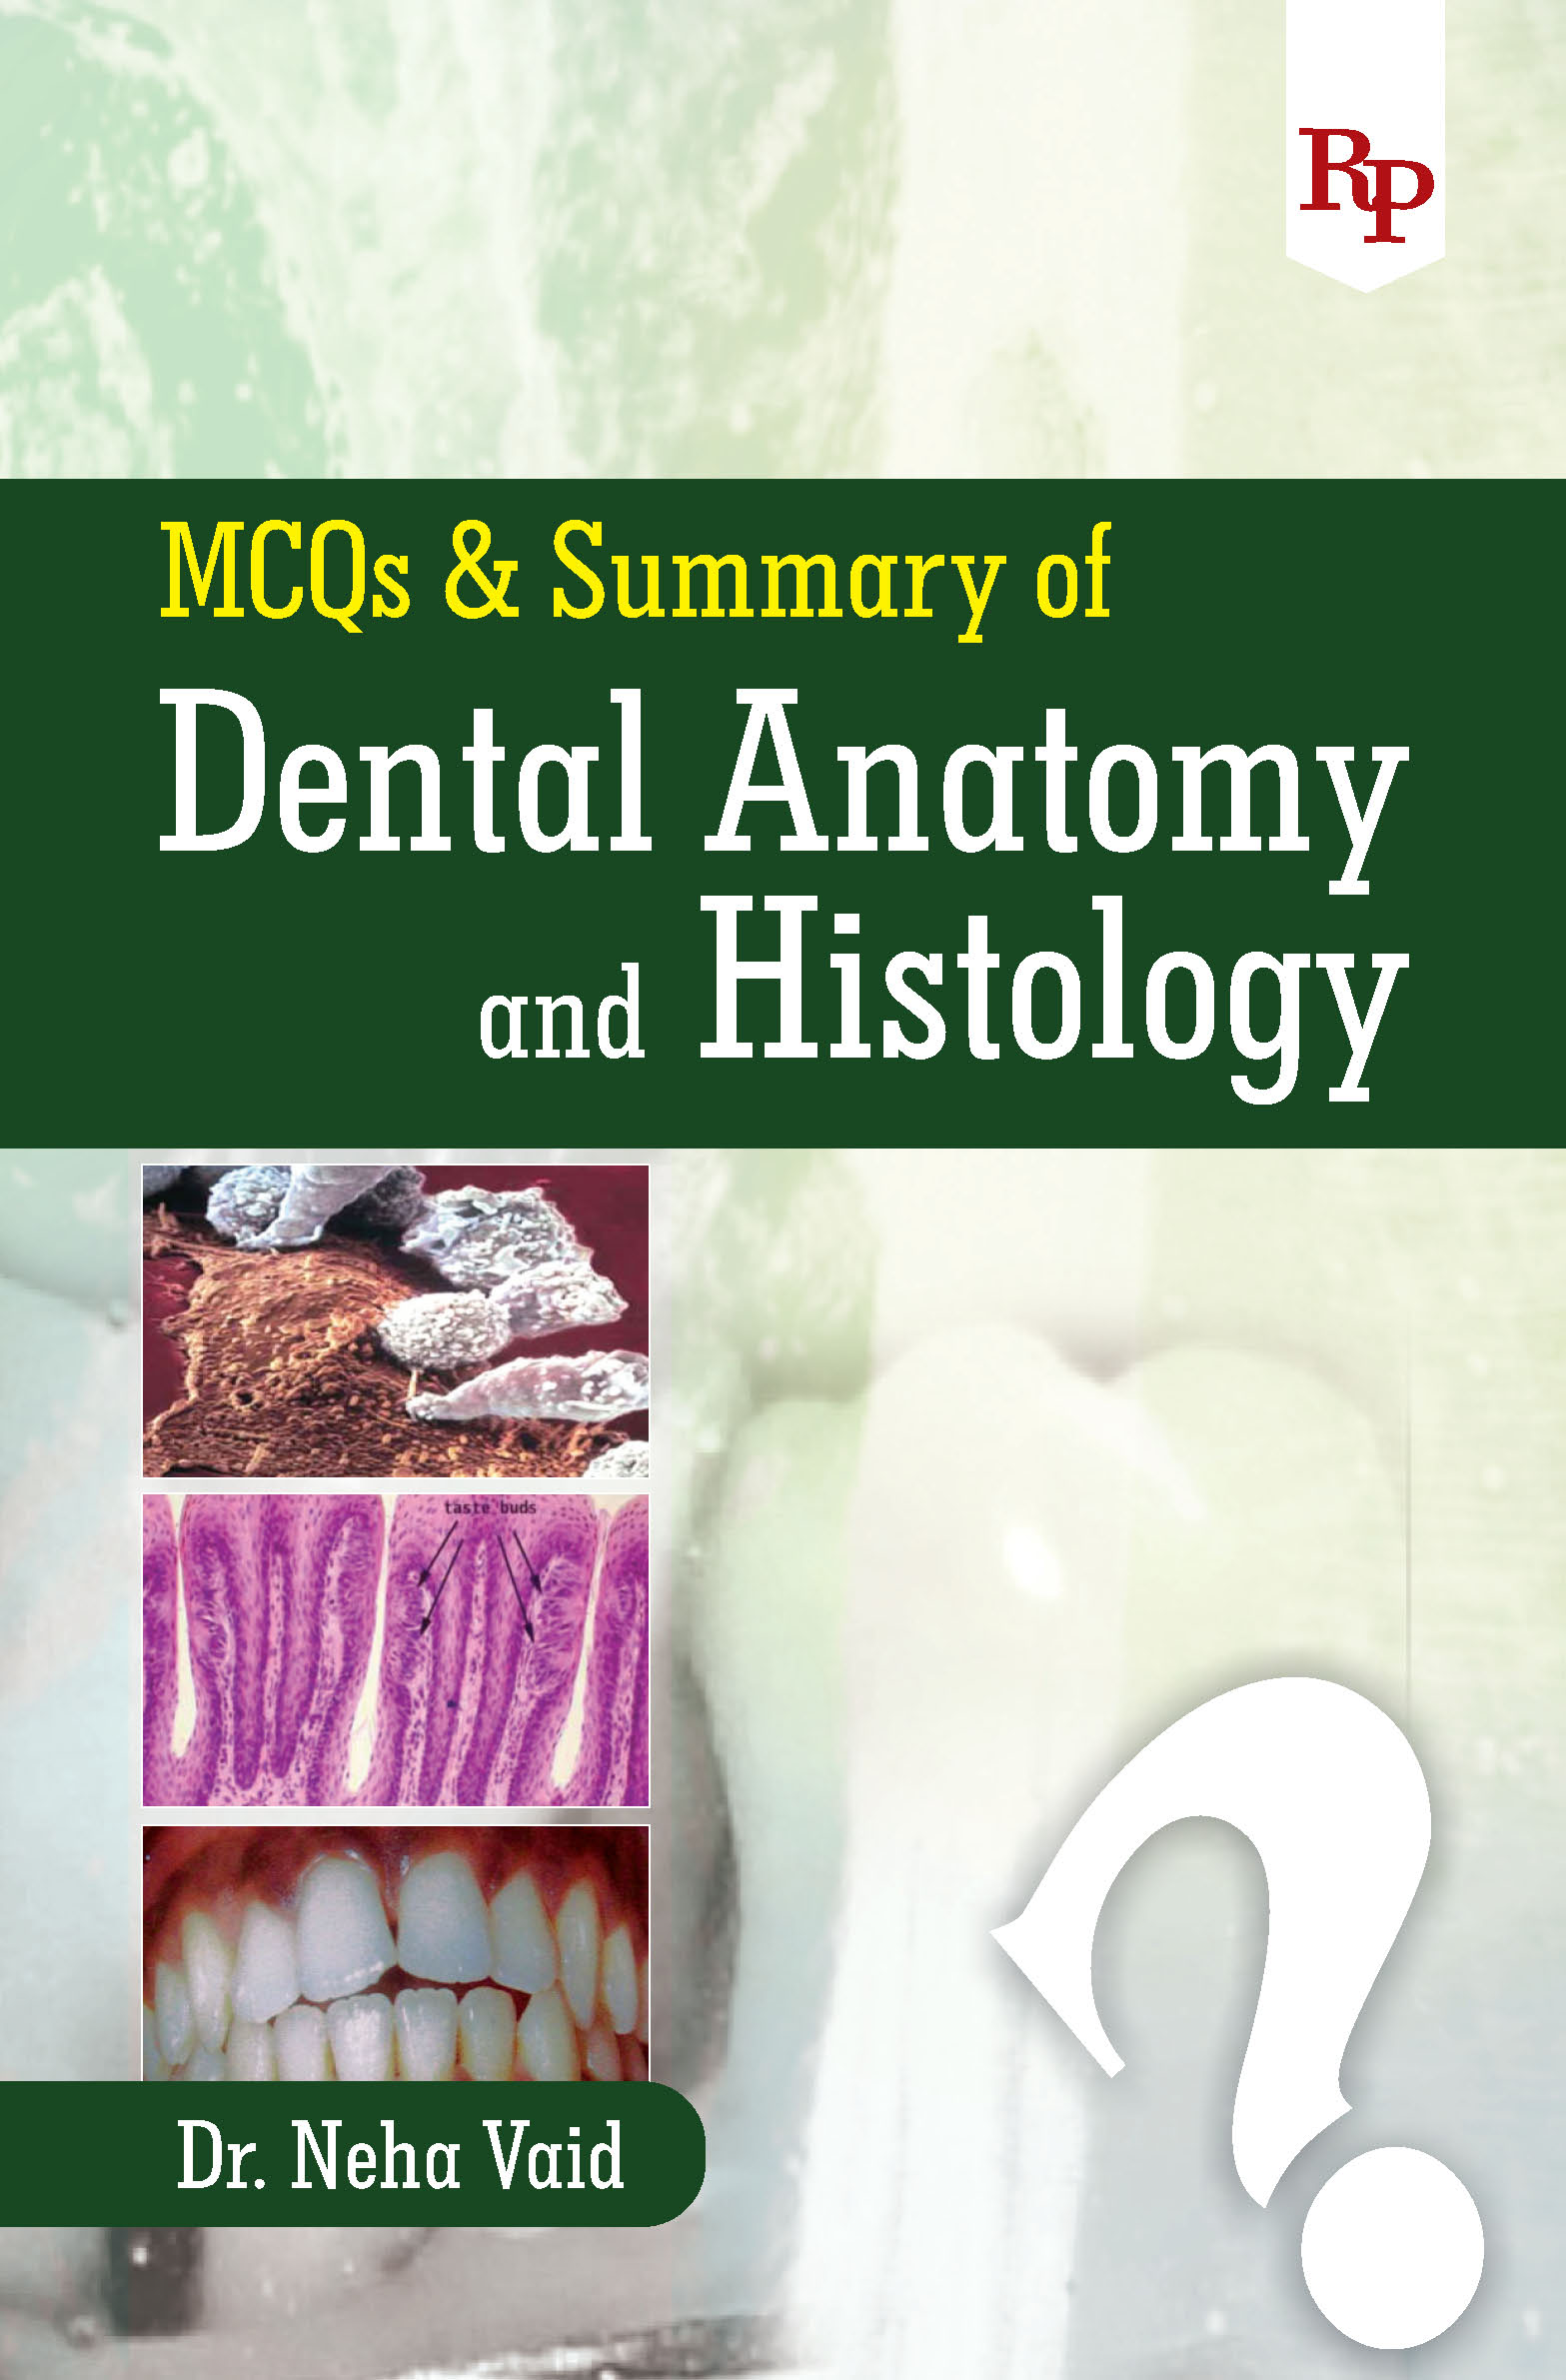 MCQS & Summary of Dental Anatomy and Histology Cover.jpg